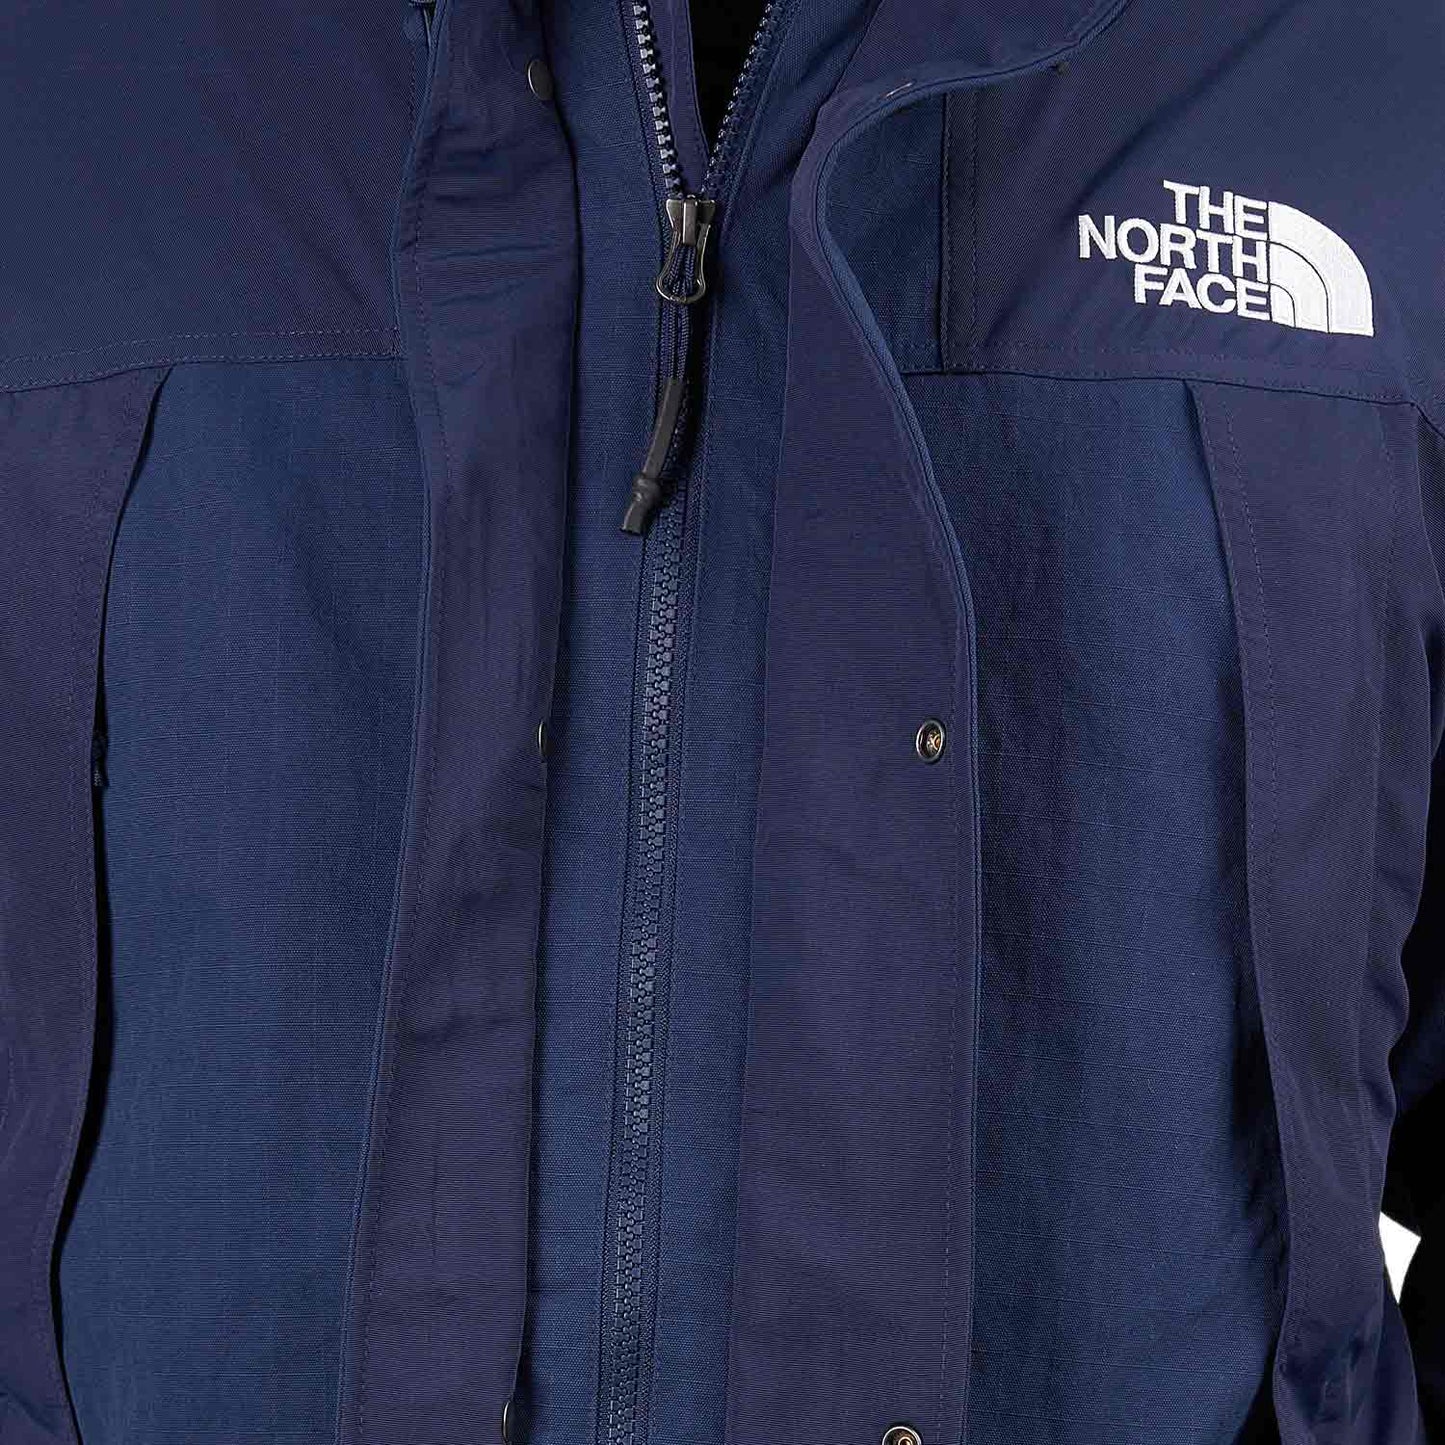 The North Face Ripstop Mountain Cargo Jacke (Blau)  - Cheap Juzsports Jordan Outlet